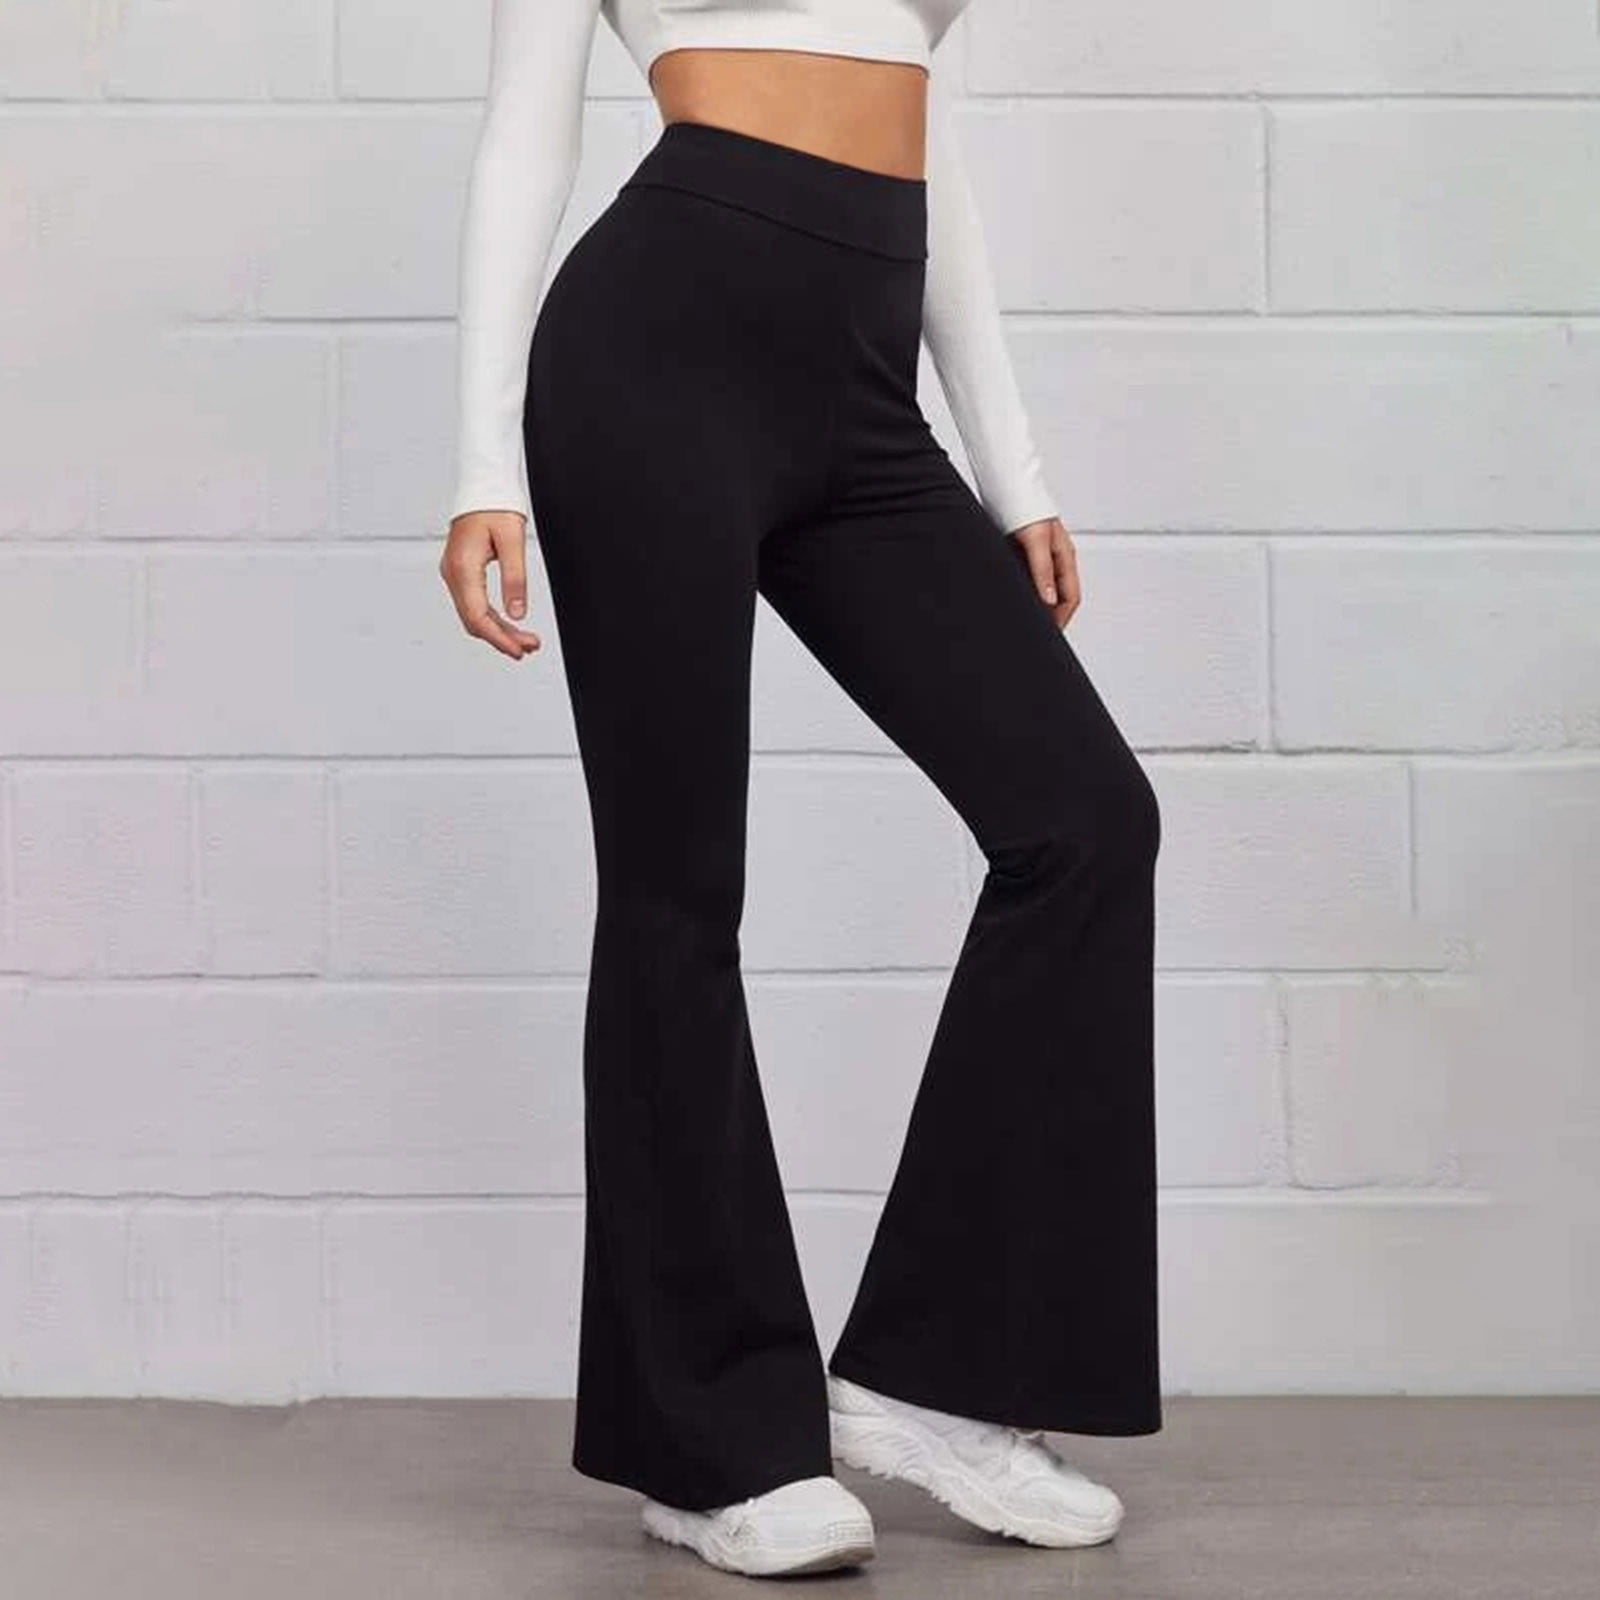 Rewenti Women's Casual Slim High Elastic Waist Solid Color Sports Yoga  Flare Pants Black 8(L) 